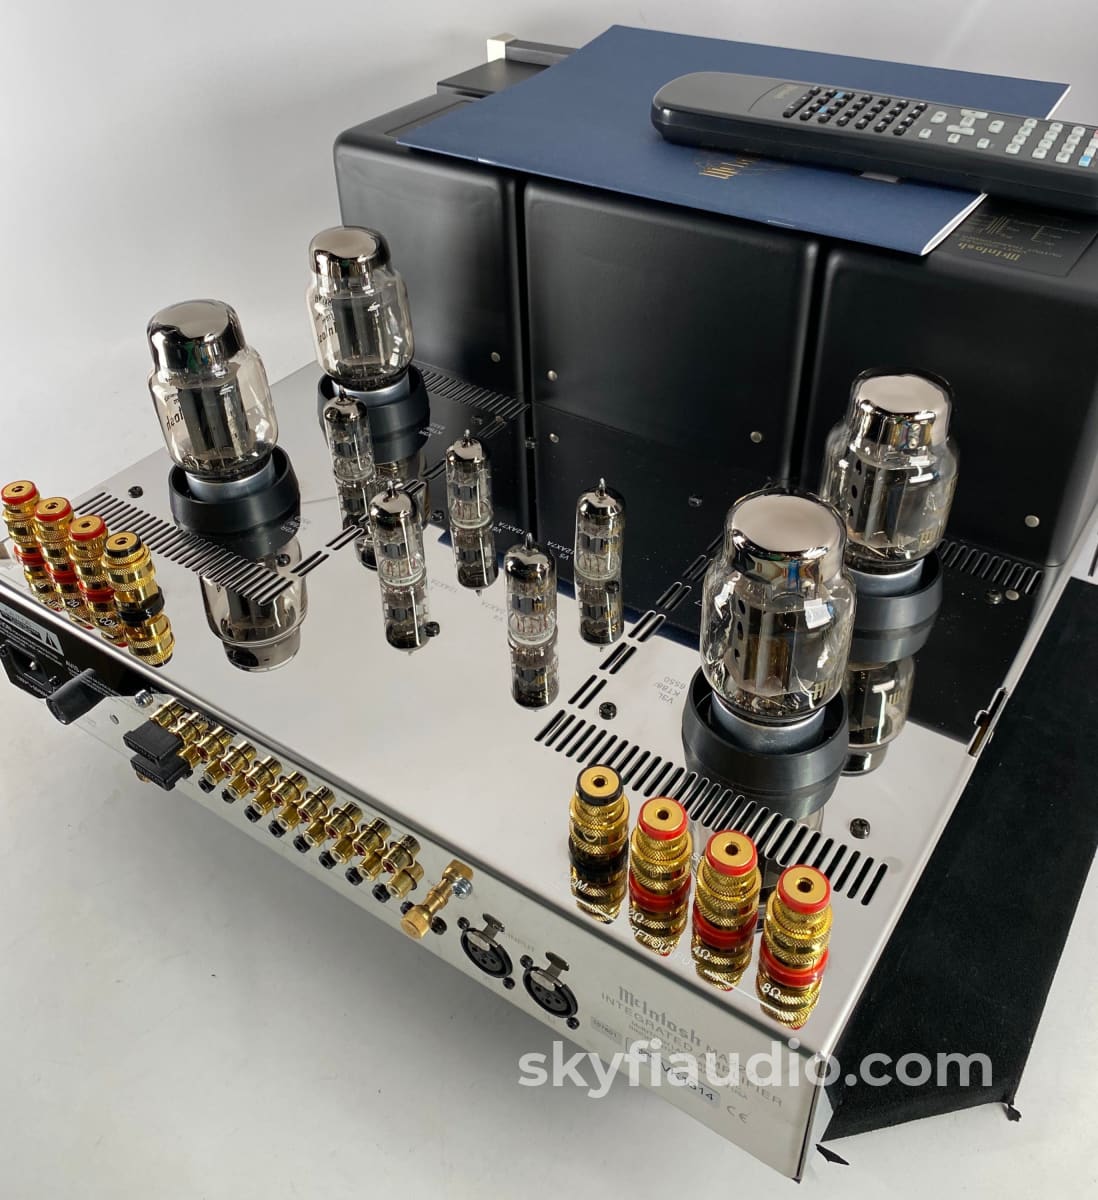 Mcintosh Ma2275 All Tube Integrated Amplifier Super Rare!